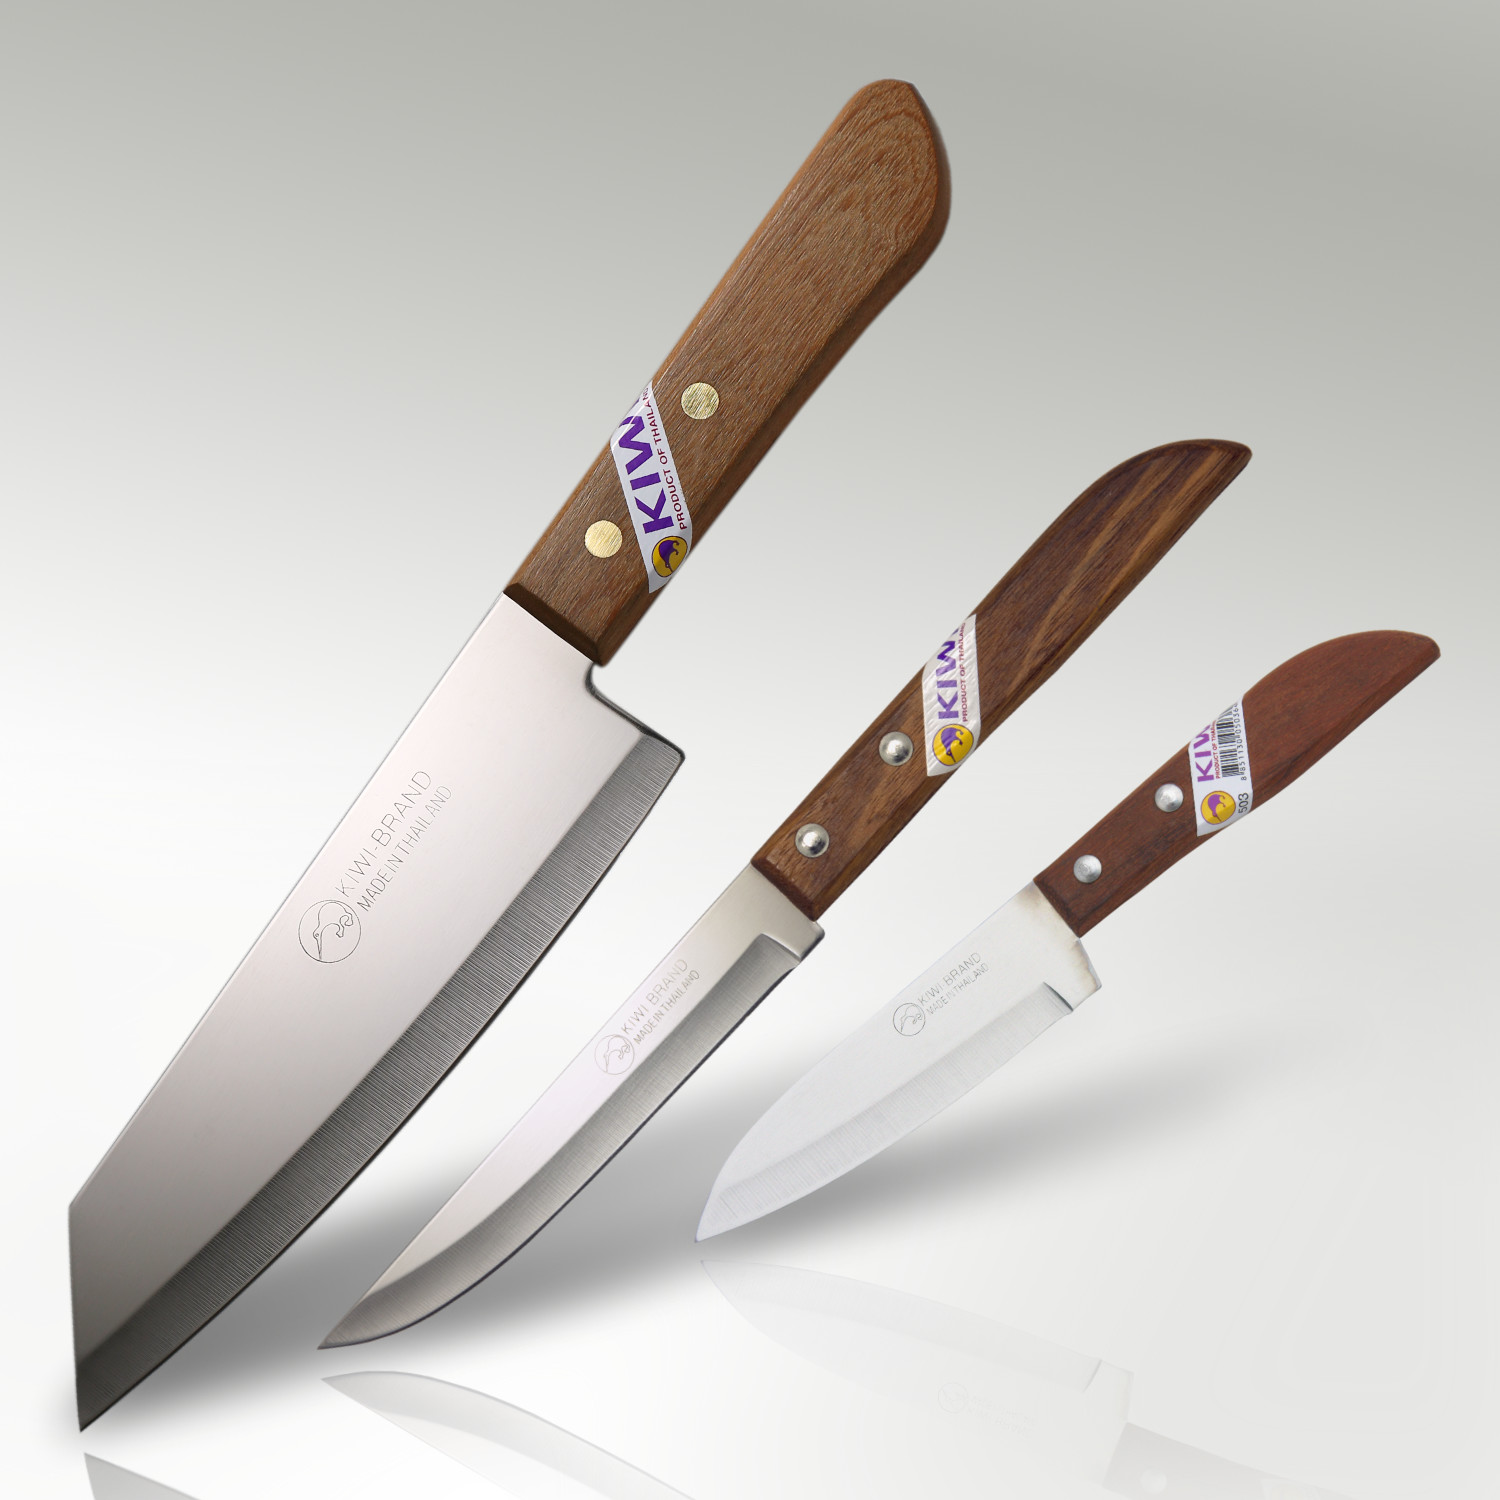 CCC001 knife set